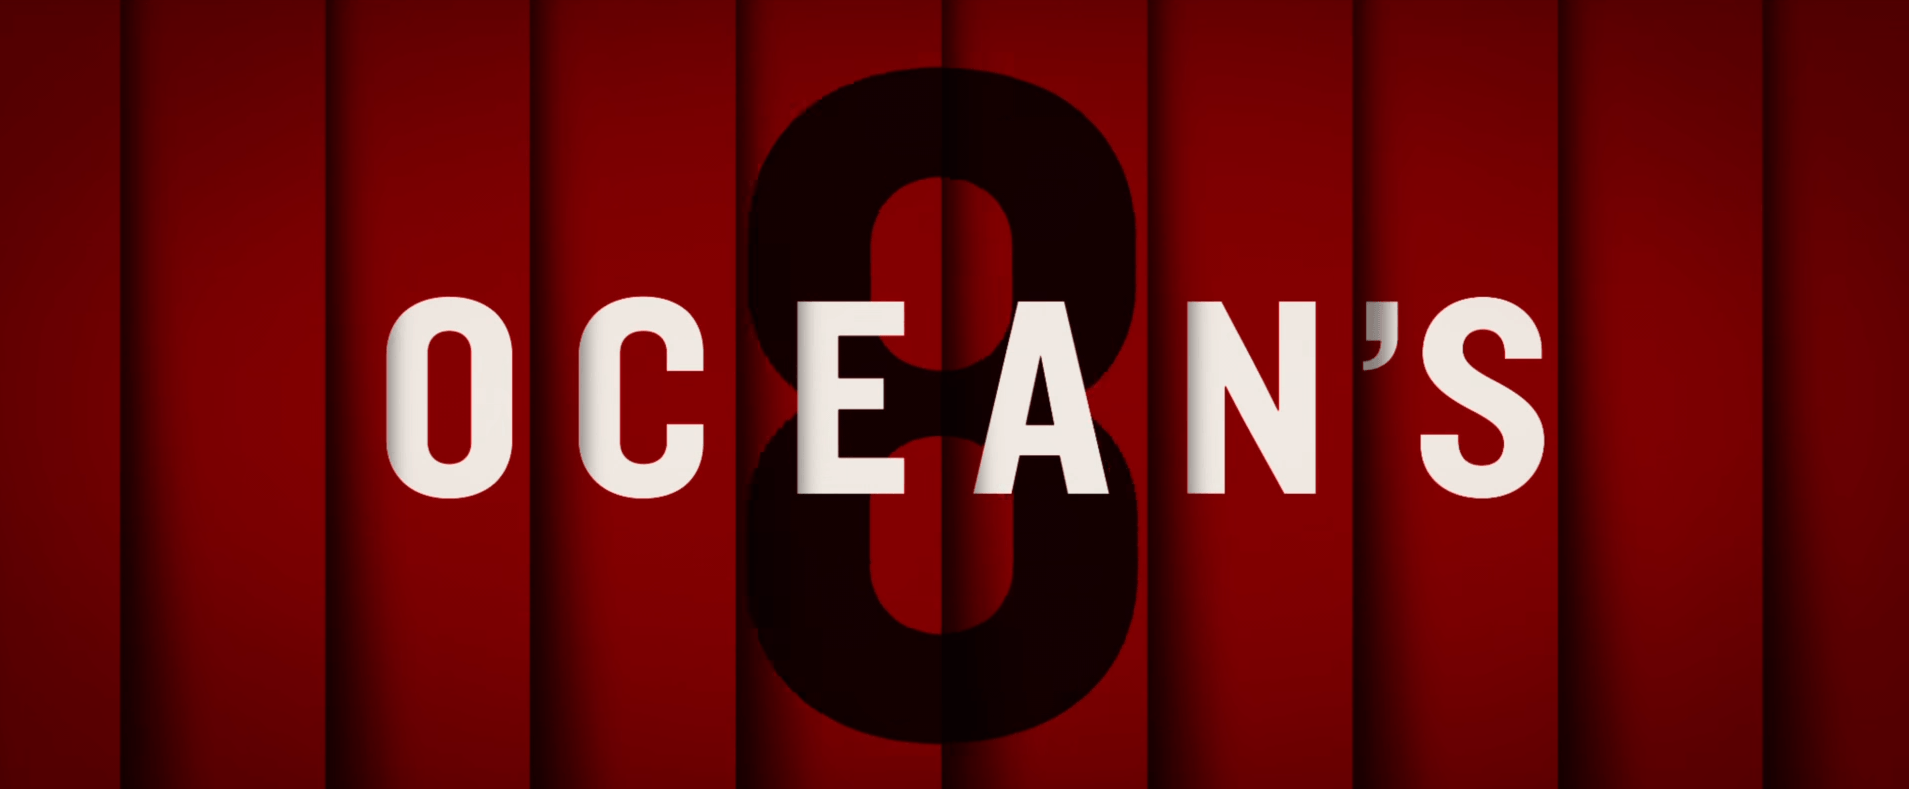 New Ocean's 8 Picture HD Wallpaper Image Downloads